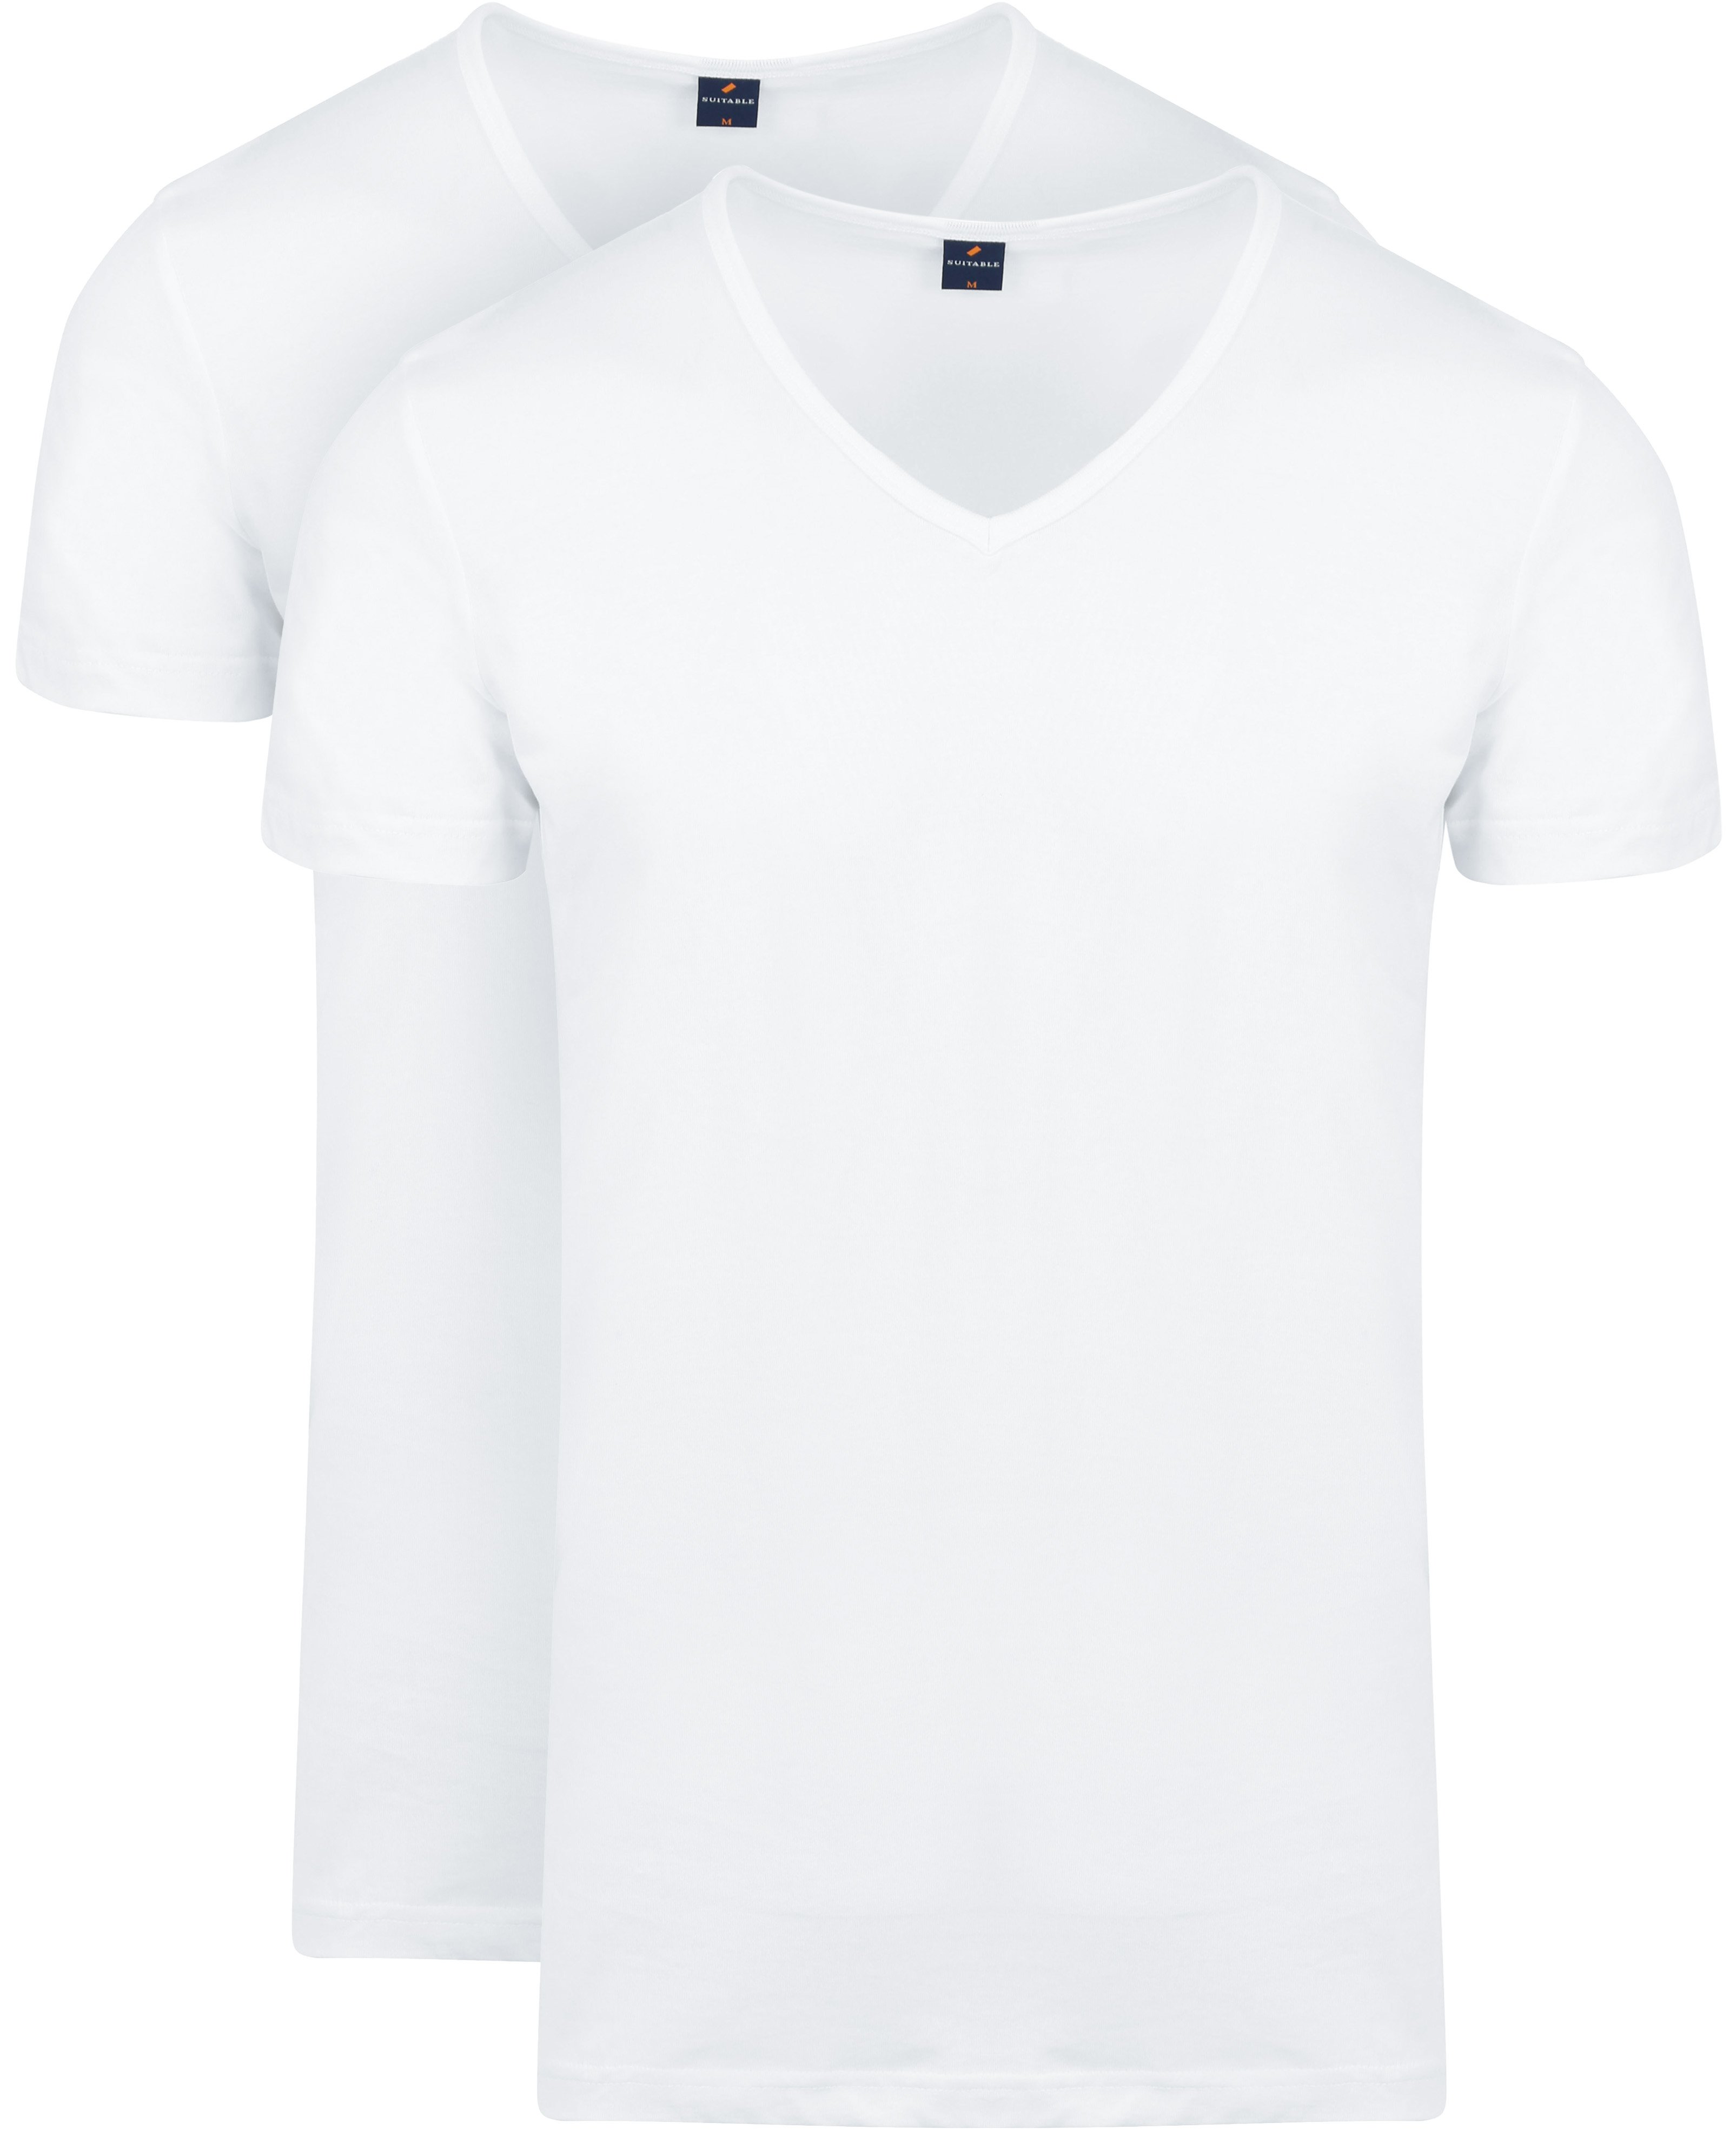 Vita T-Shirt V-Hals Wit 2-Pack